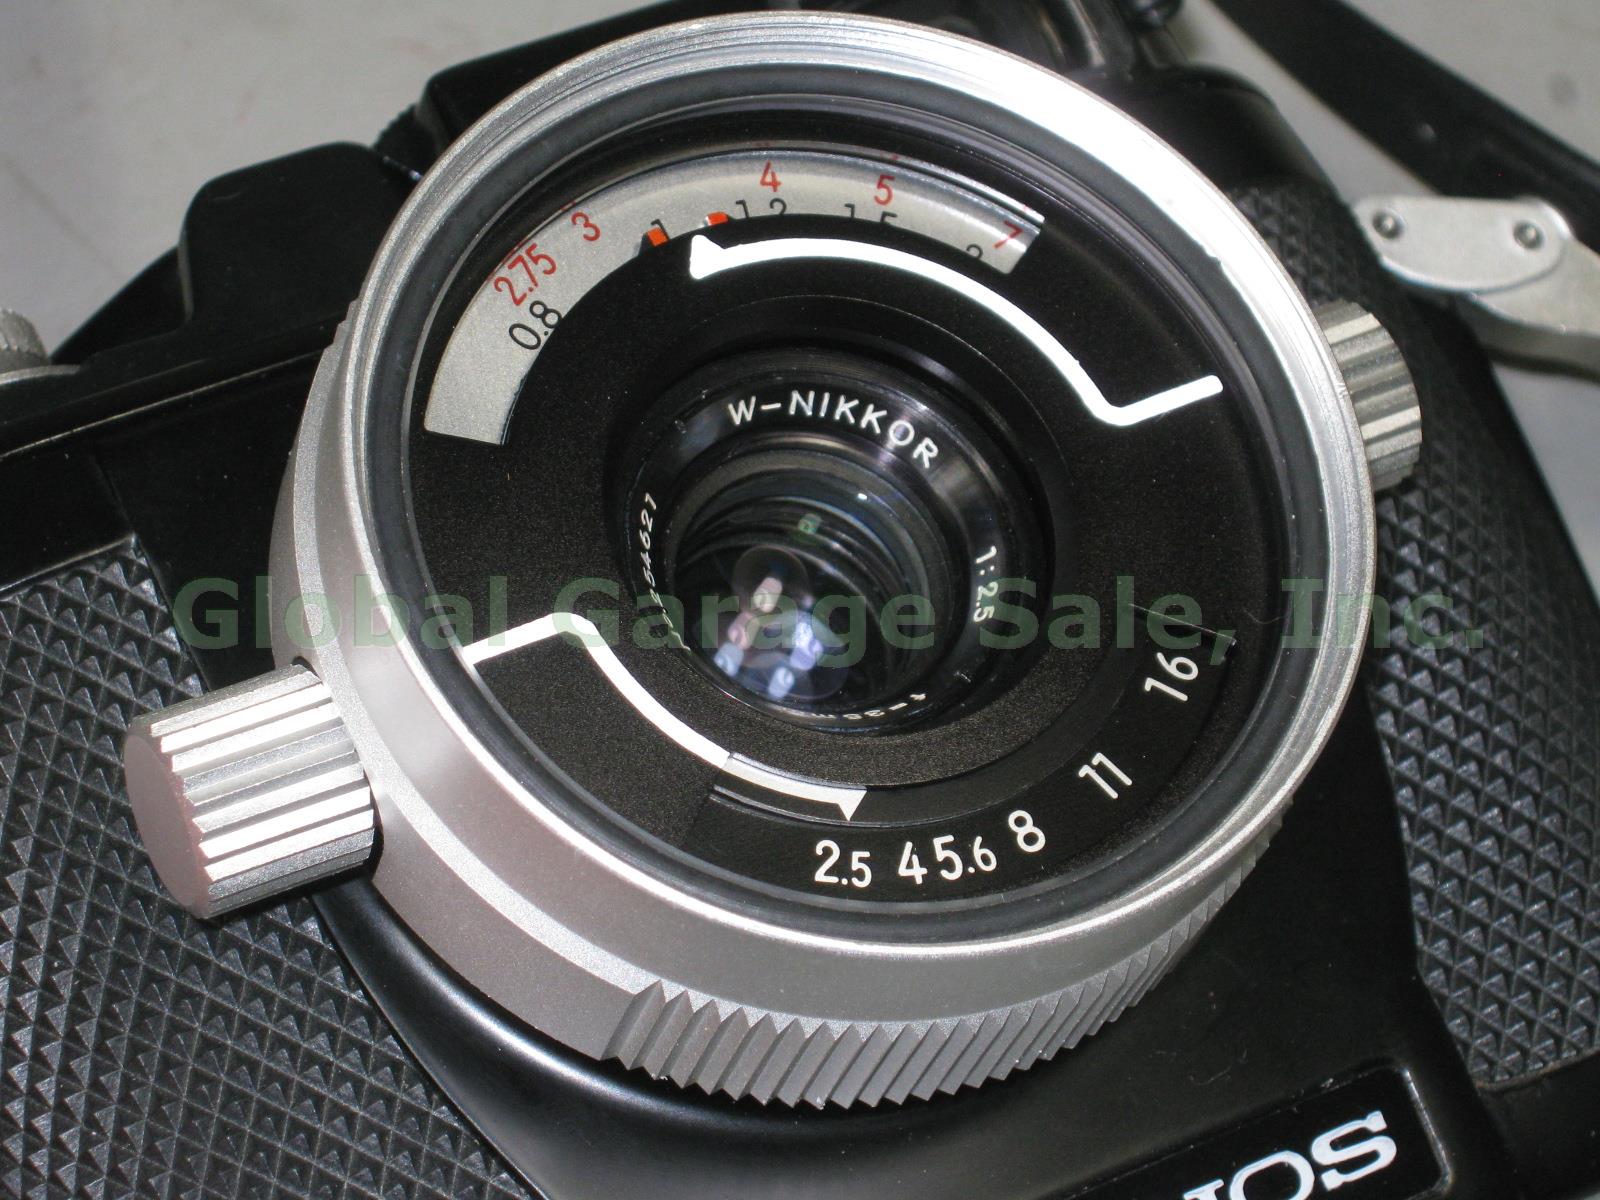 Vtg Nikon Nikonos II Underwater 35mm Camera W-Nikkor f/2.5 Lens Serial No 956852 2